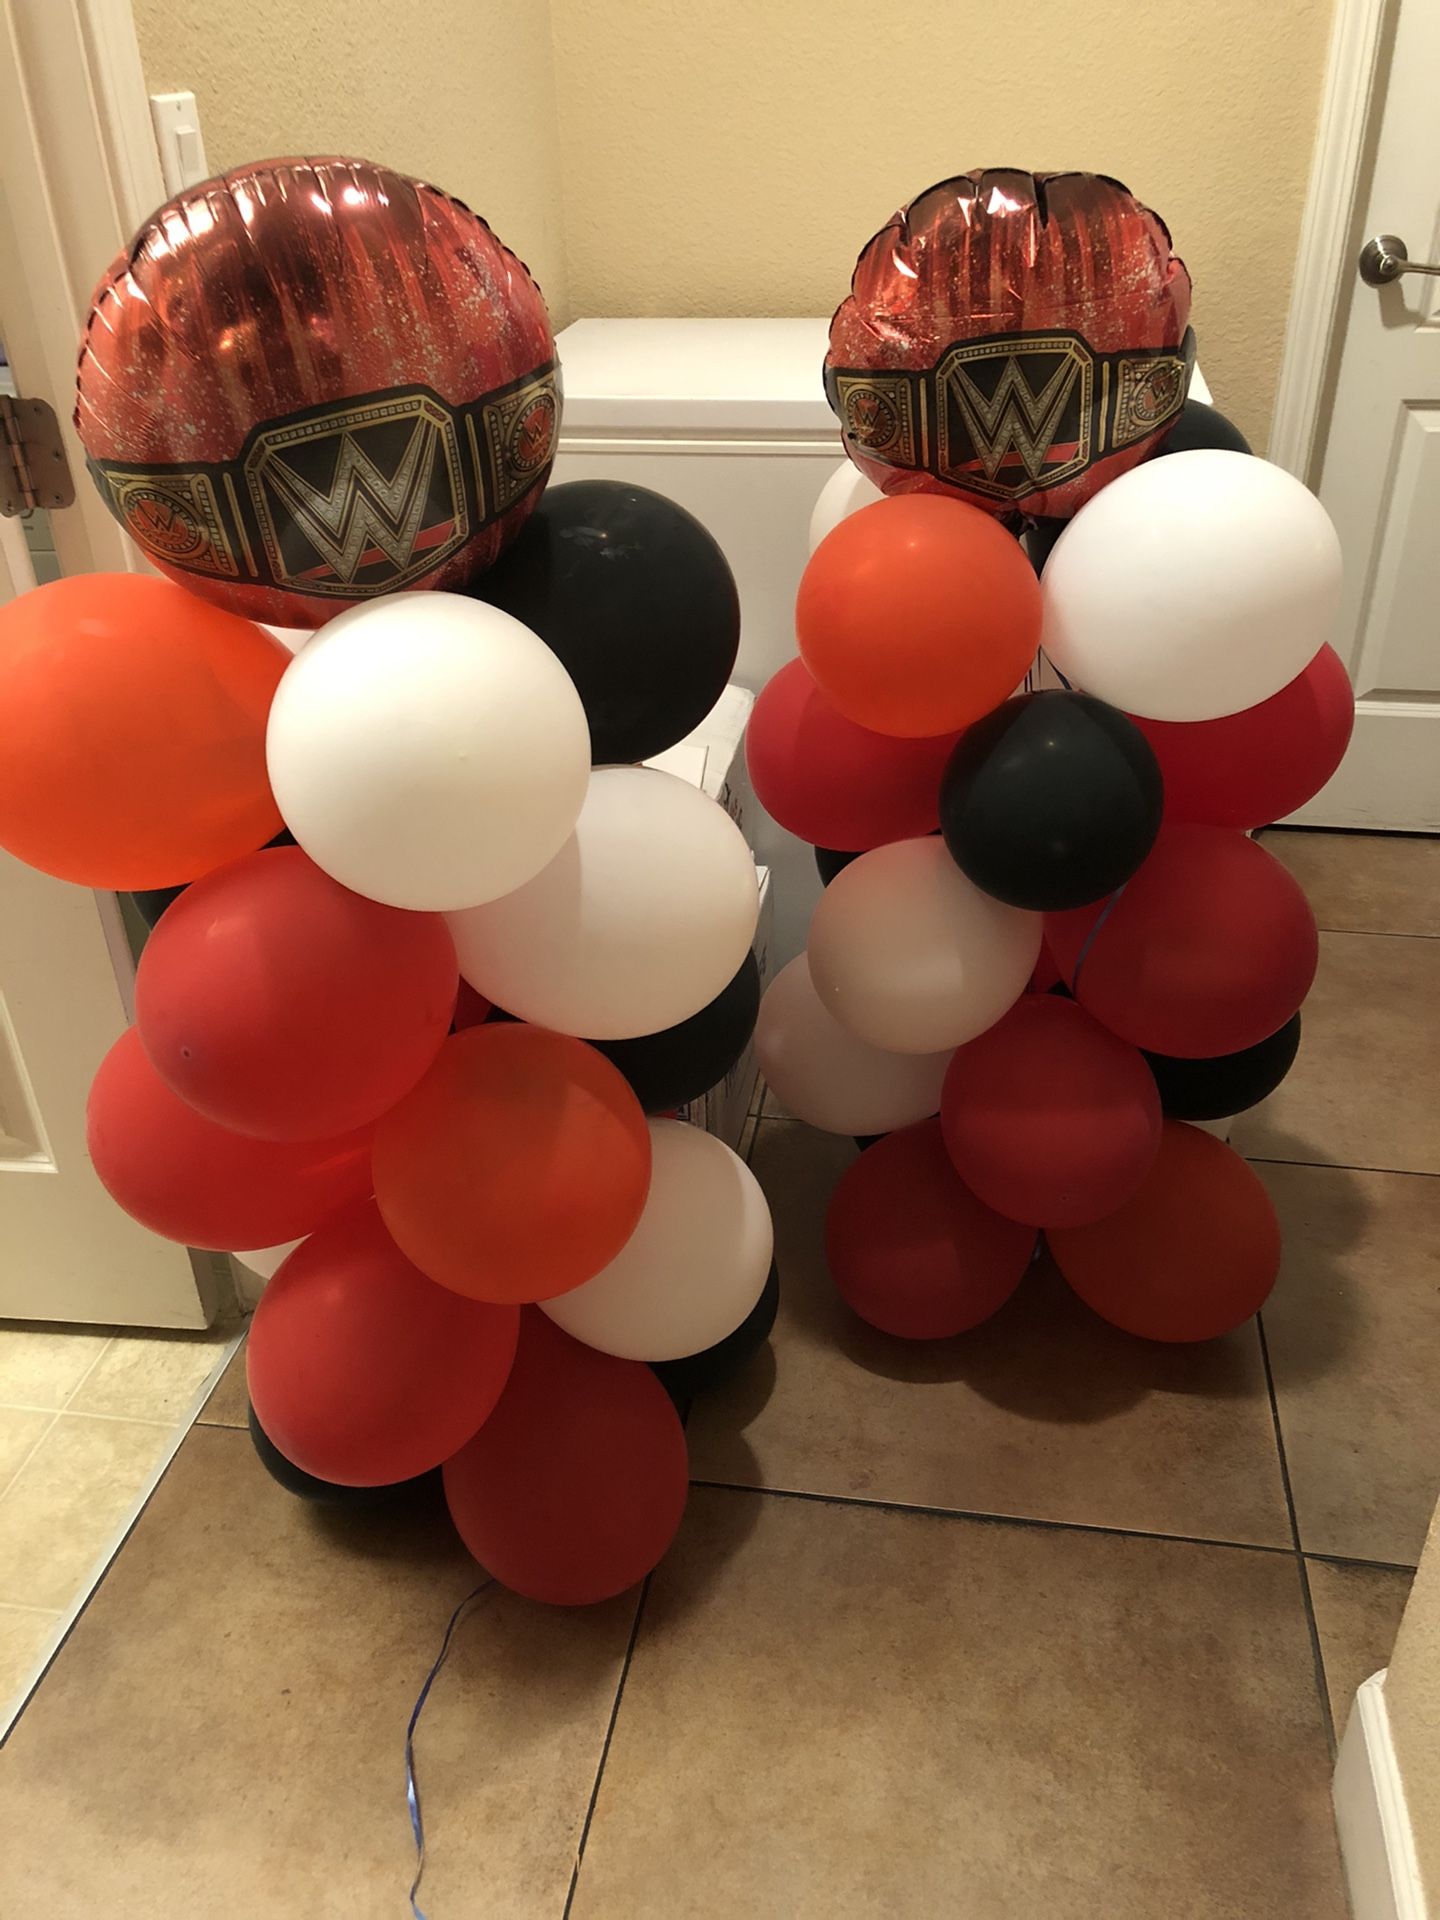 2 party balloons pillars. $10